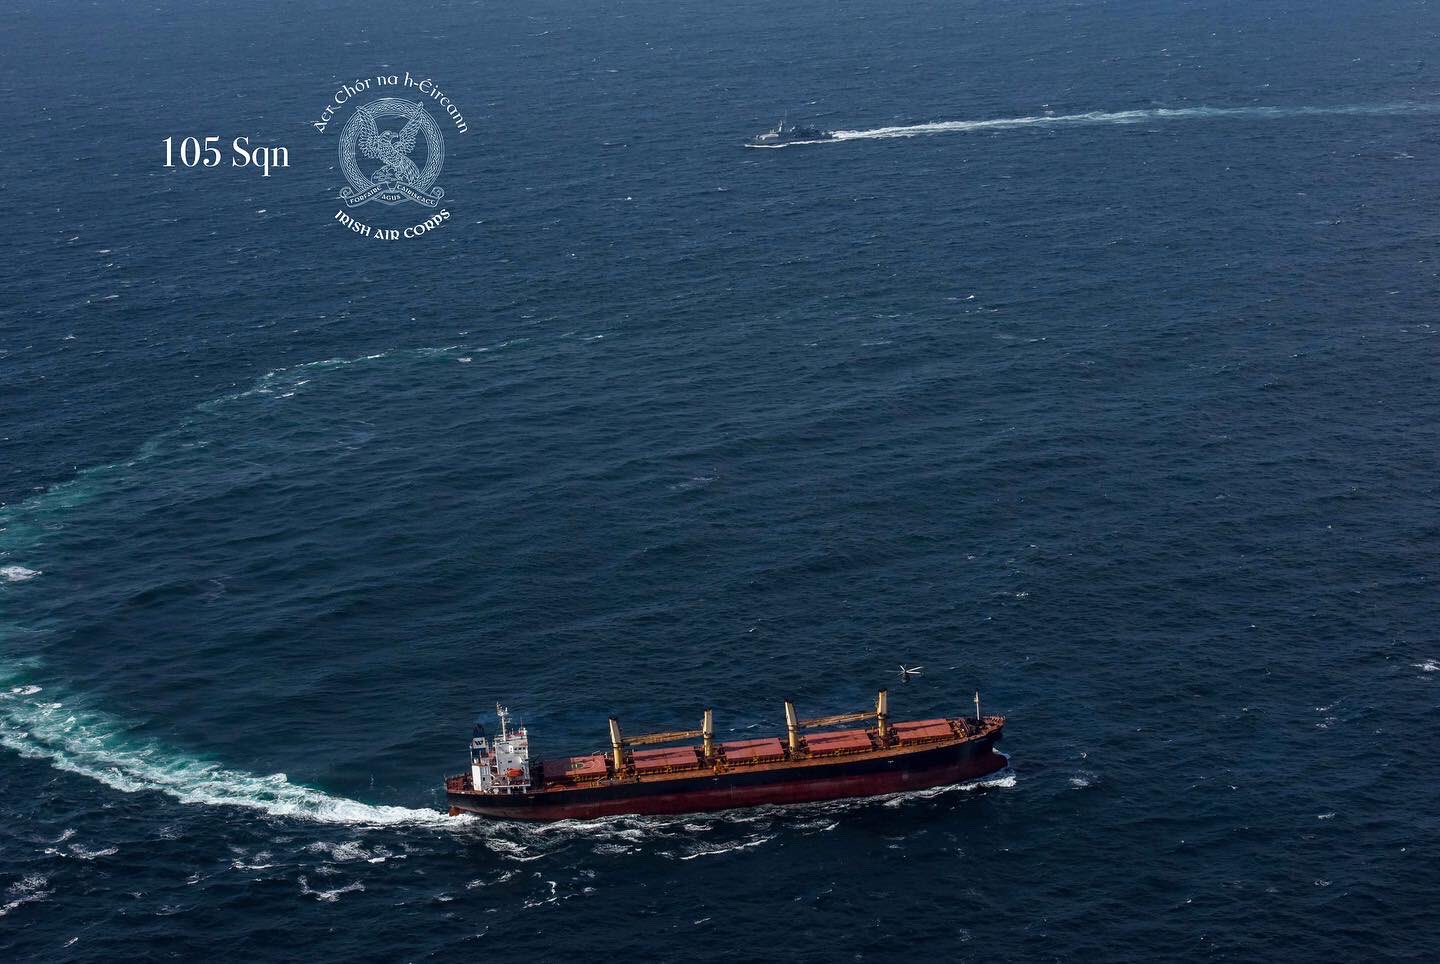 An Irish Naval Vessel circles the Panama-registered MV Matthew off the Irish coast